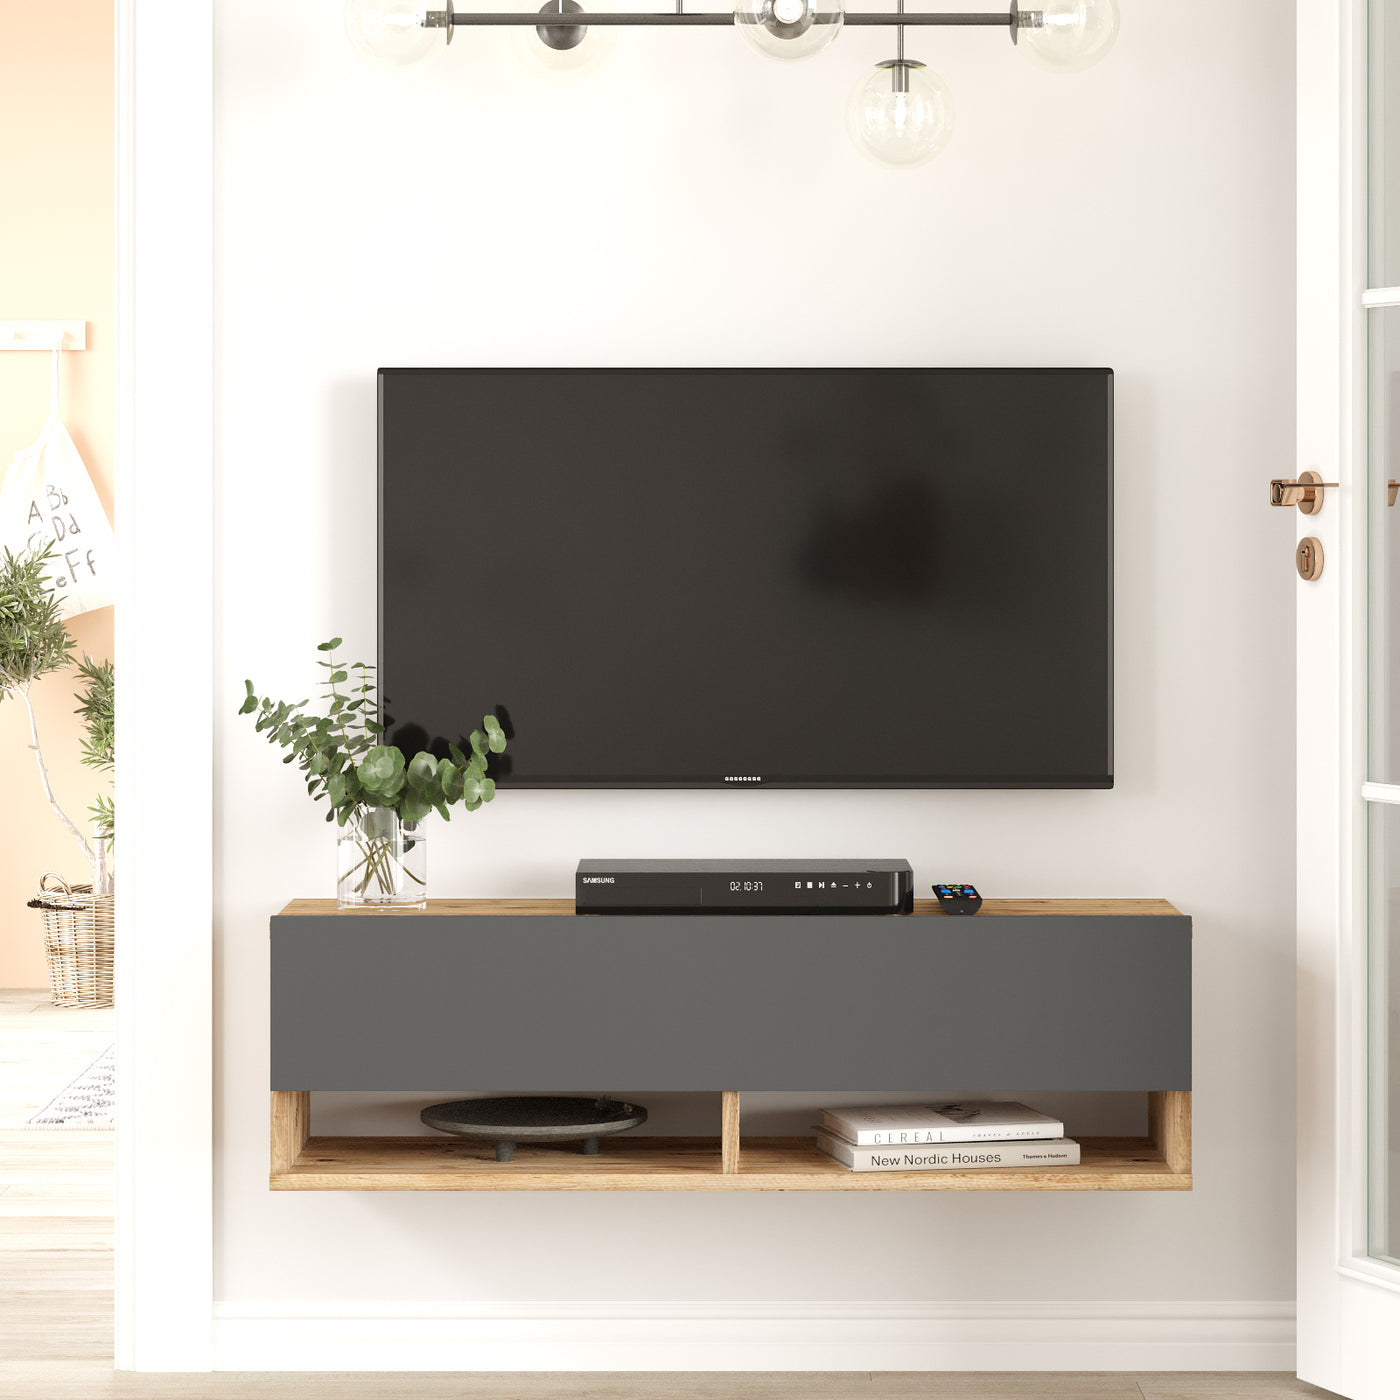 Roter צבע אורן משולב פחם -FR13-S מזנון טלוויזיה צף מבית HOMAX - משלוח חינם